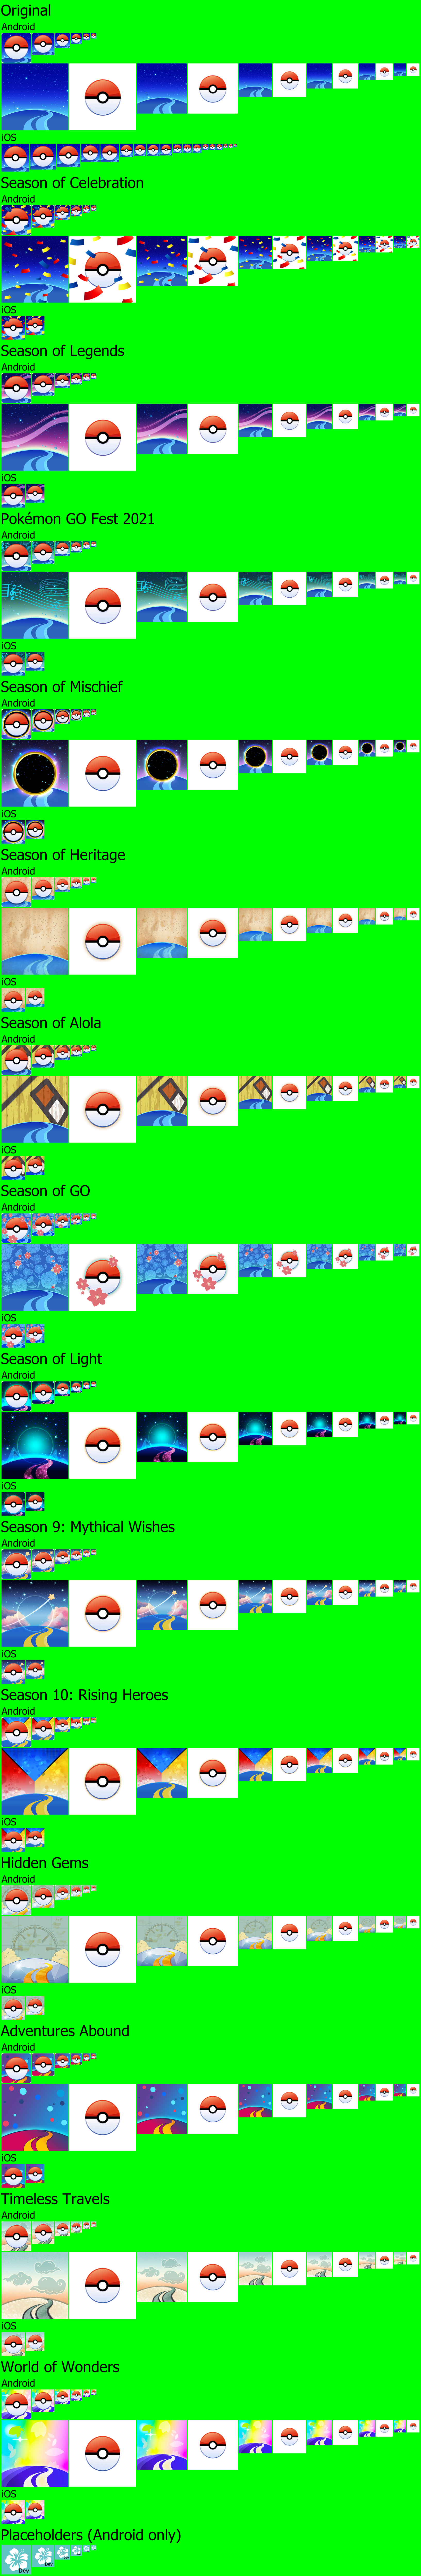 Pokémon GO - App Icons